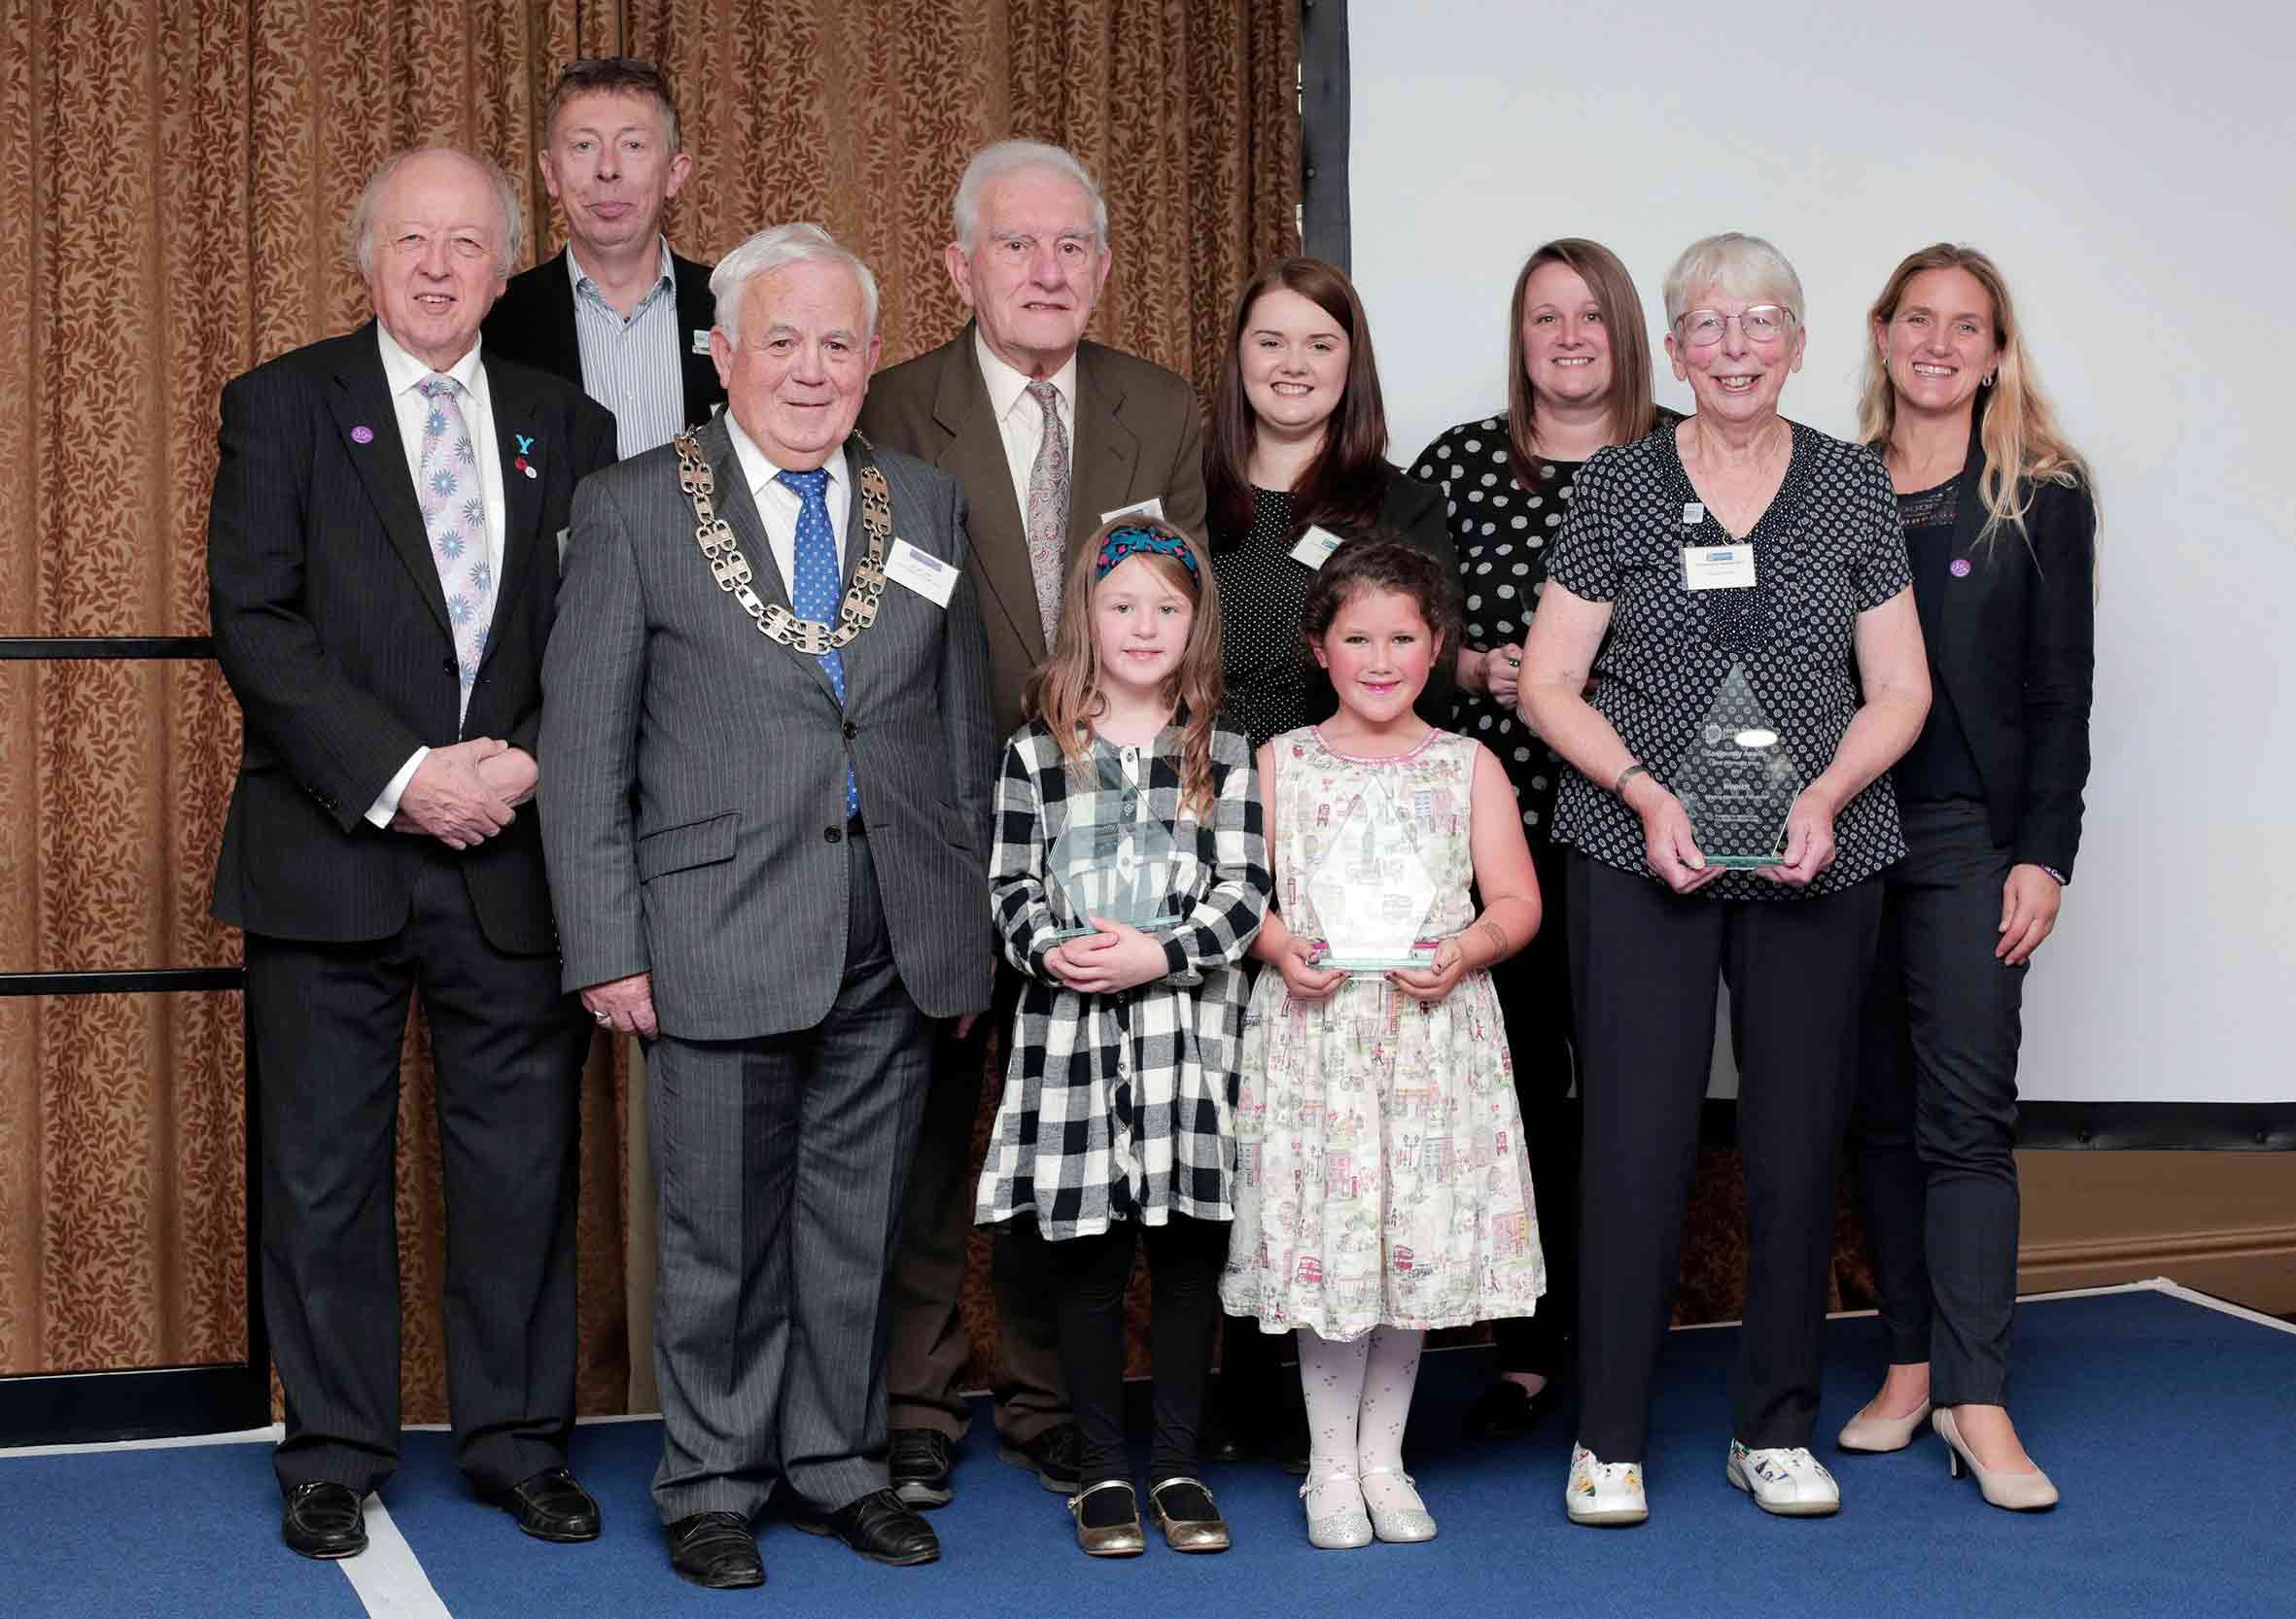 County Council leader Cllr Carl Les (far left) and chairman Cllr Jim Clark (third left) with Community Award winners 2019